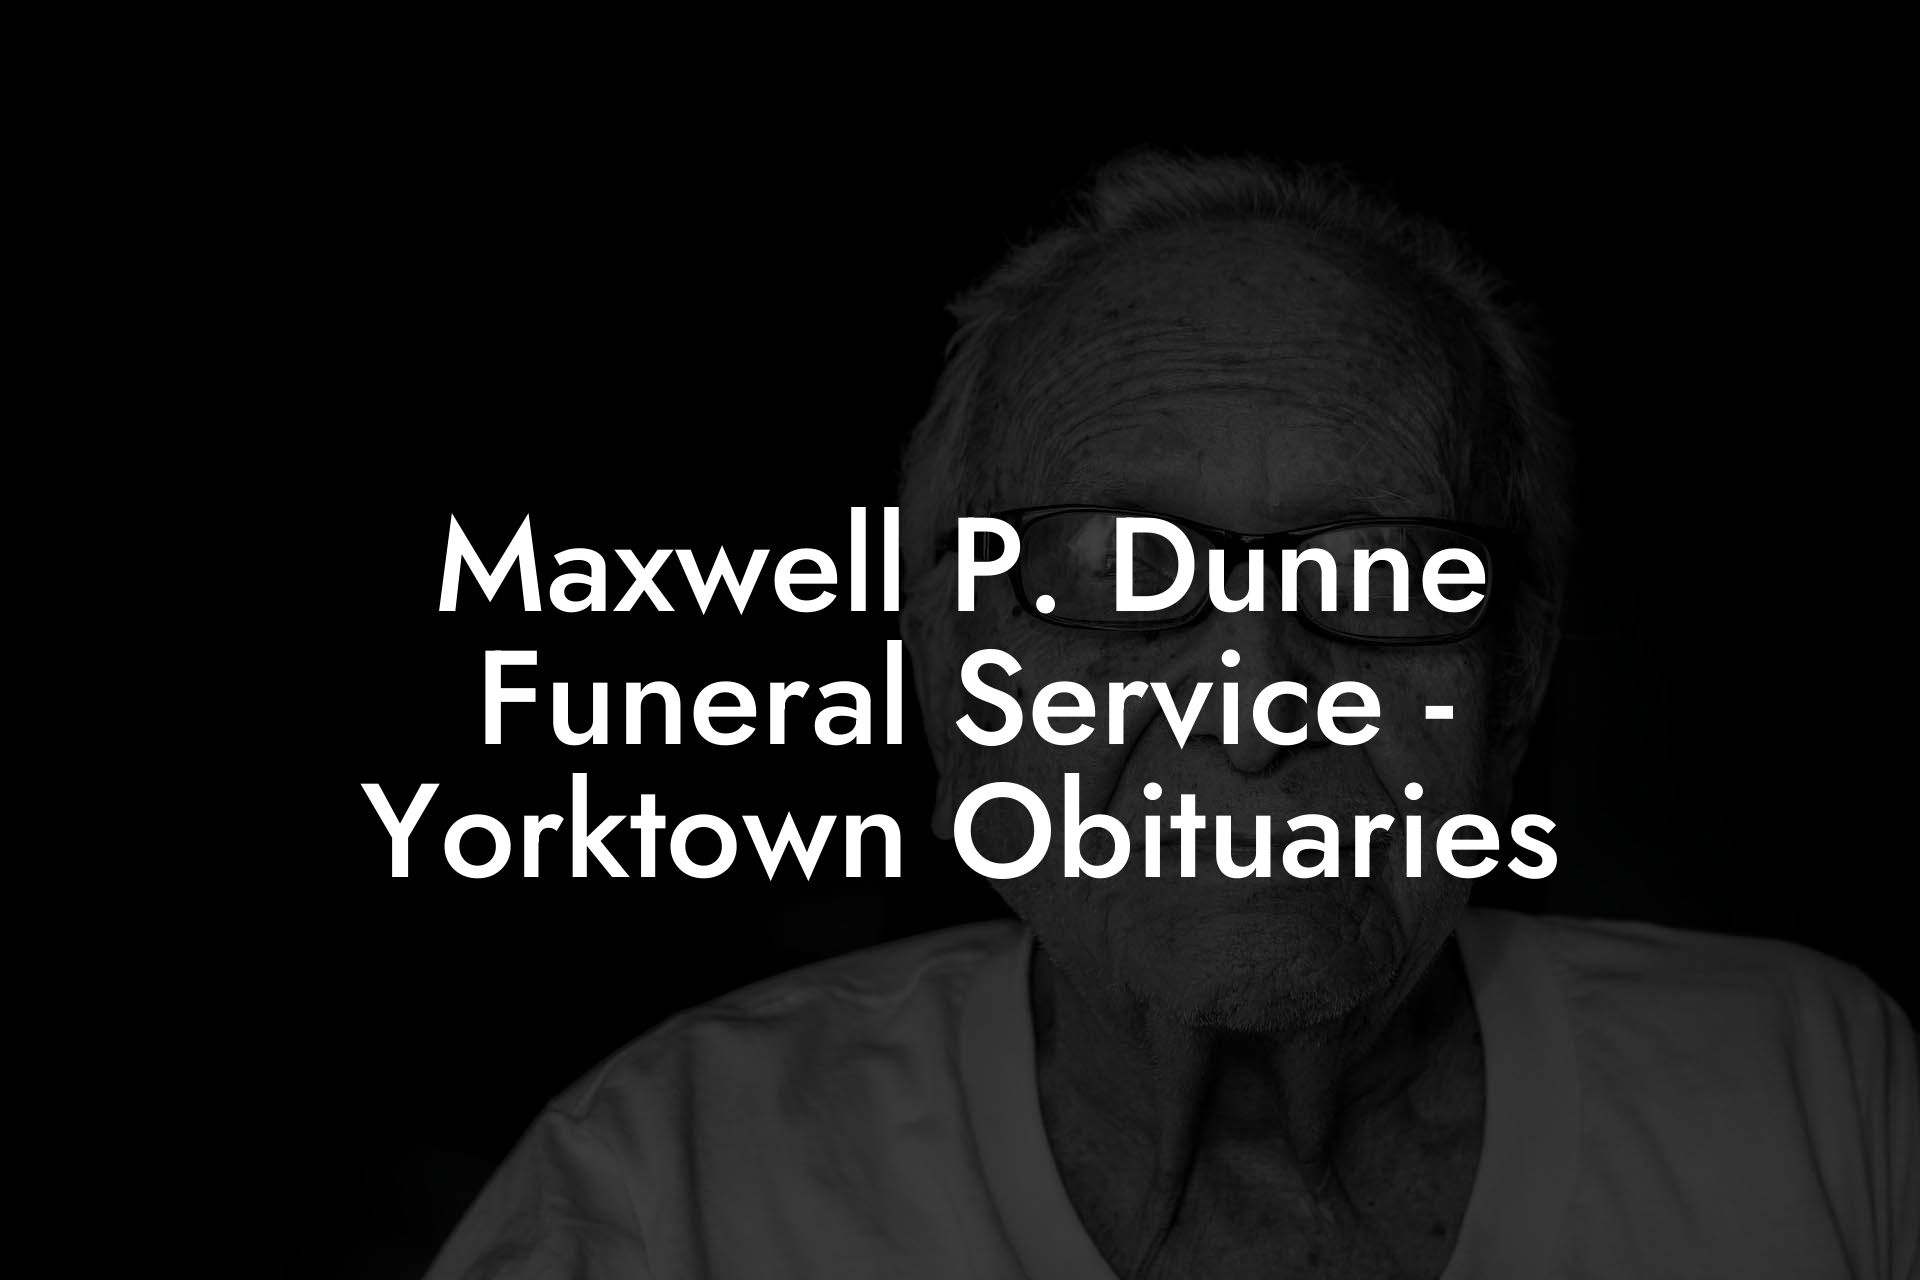 Maxwell P. Dunne Funeral Service - Yorktown Obituaries